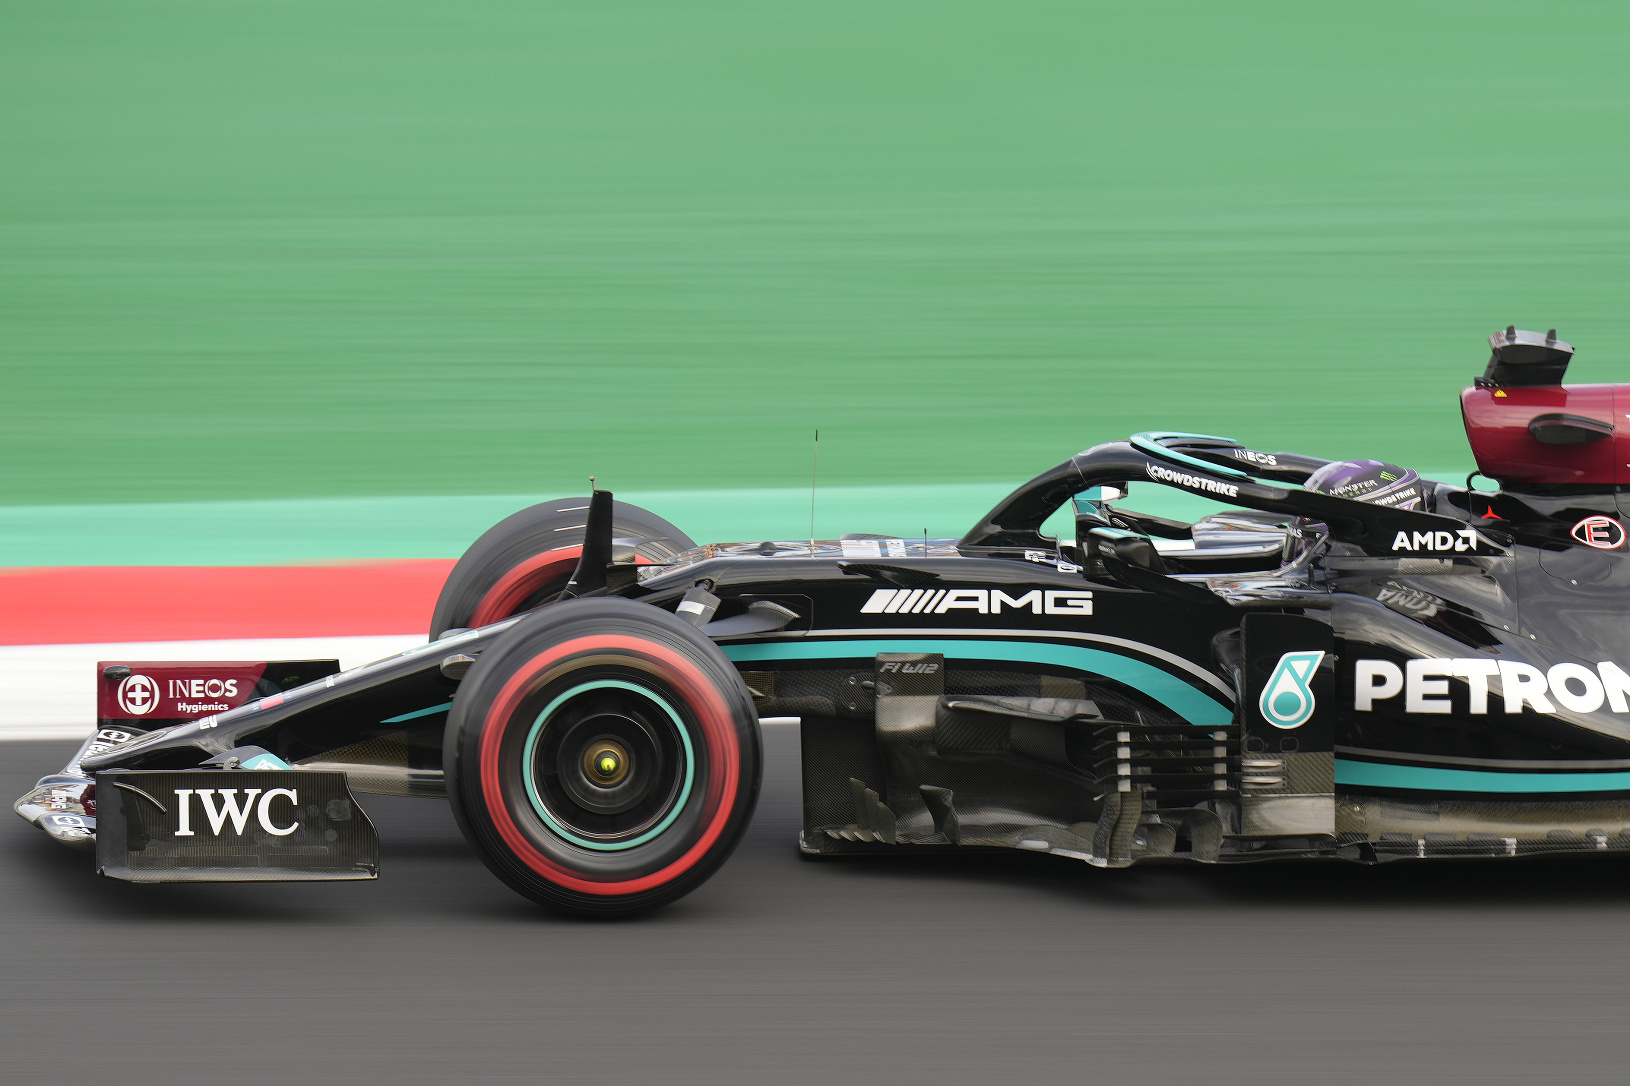 Britský jazdec Lewis Hamilton